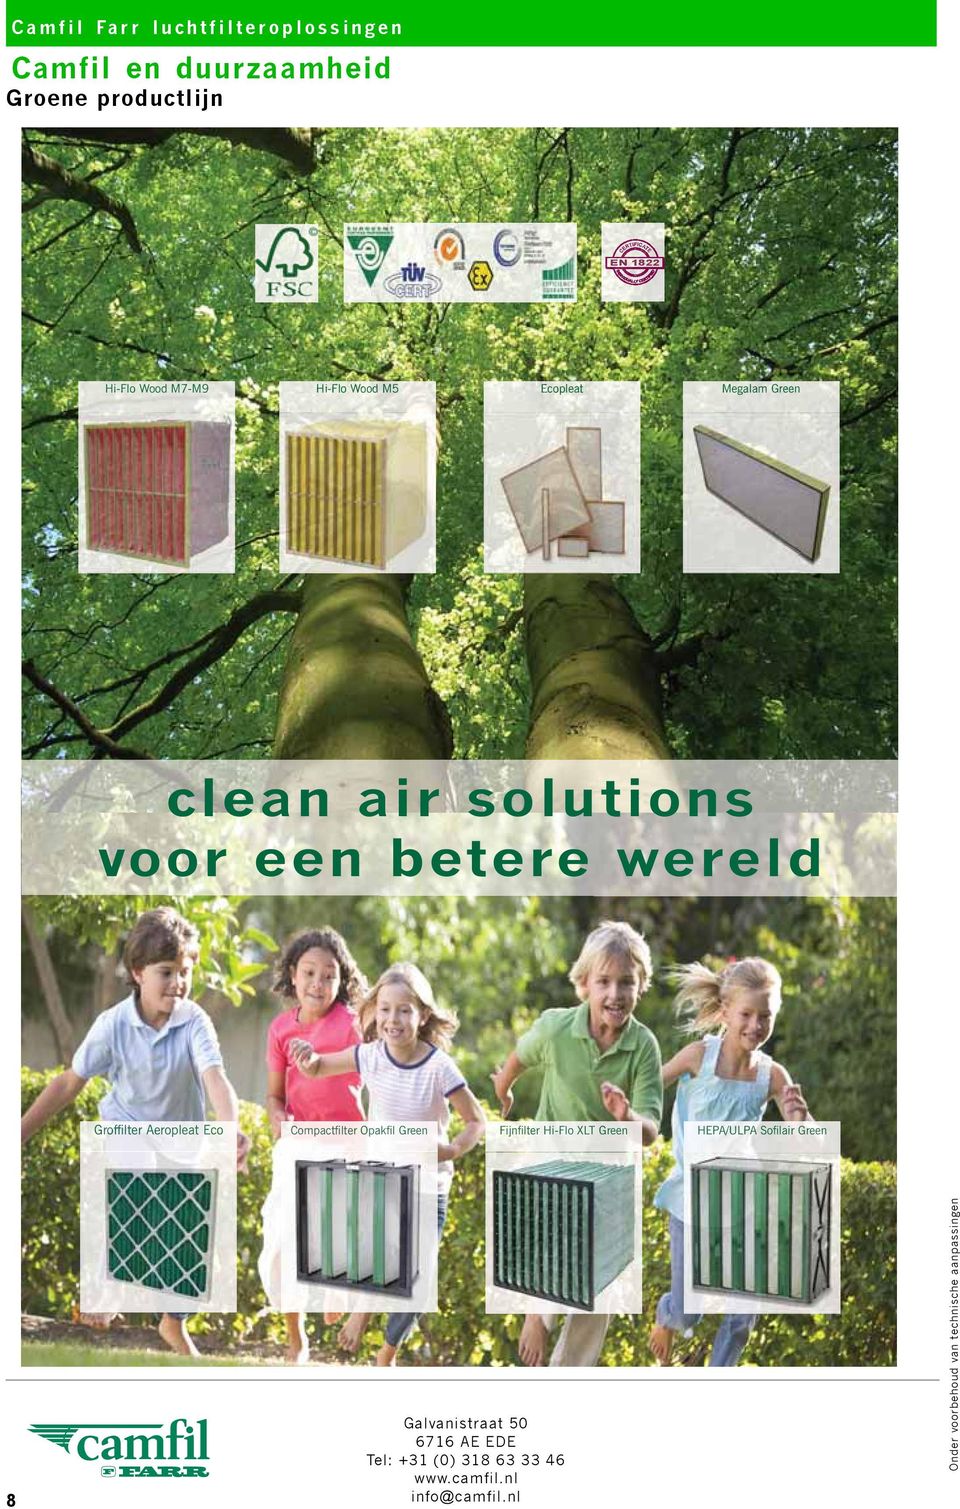 een betere wereld Grof filt lter Aer opleat Eco Com ompactfi tfilter Opakfil Green Fij nfilte rhi-f